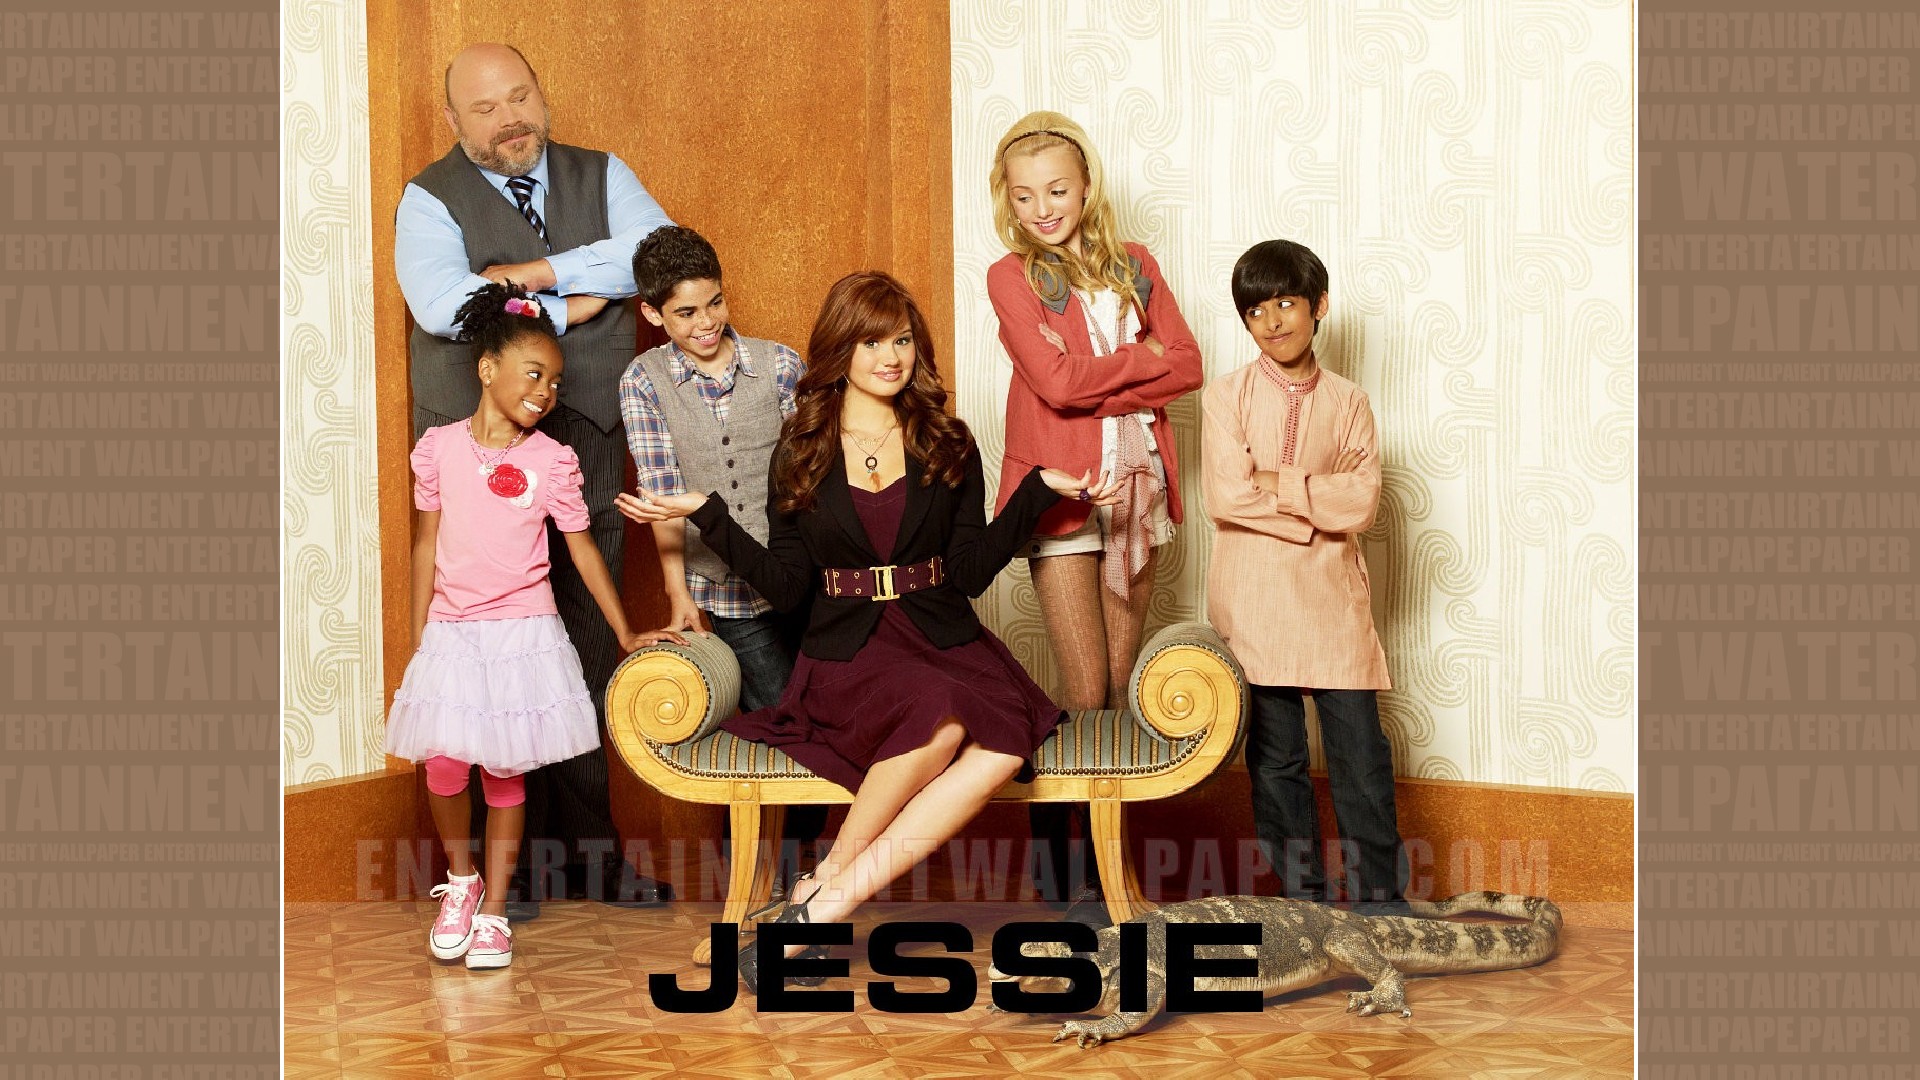 Jessie - Jessie Wallpaper (41242885) - Fanpop